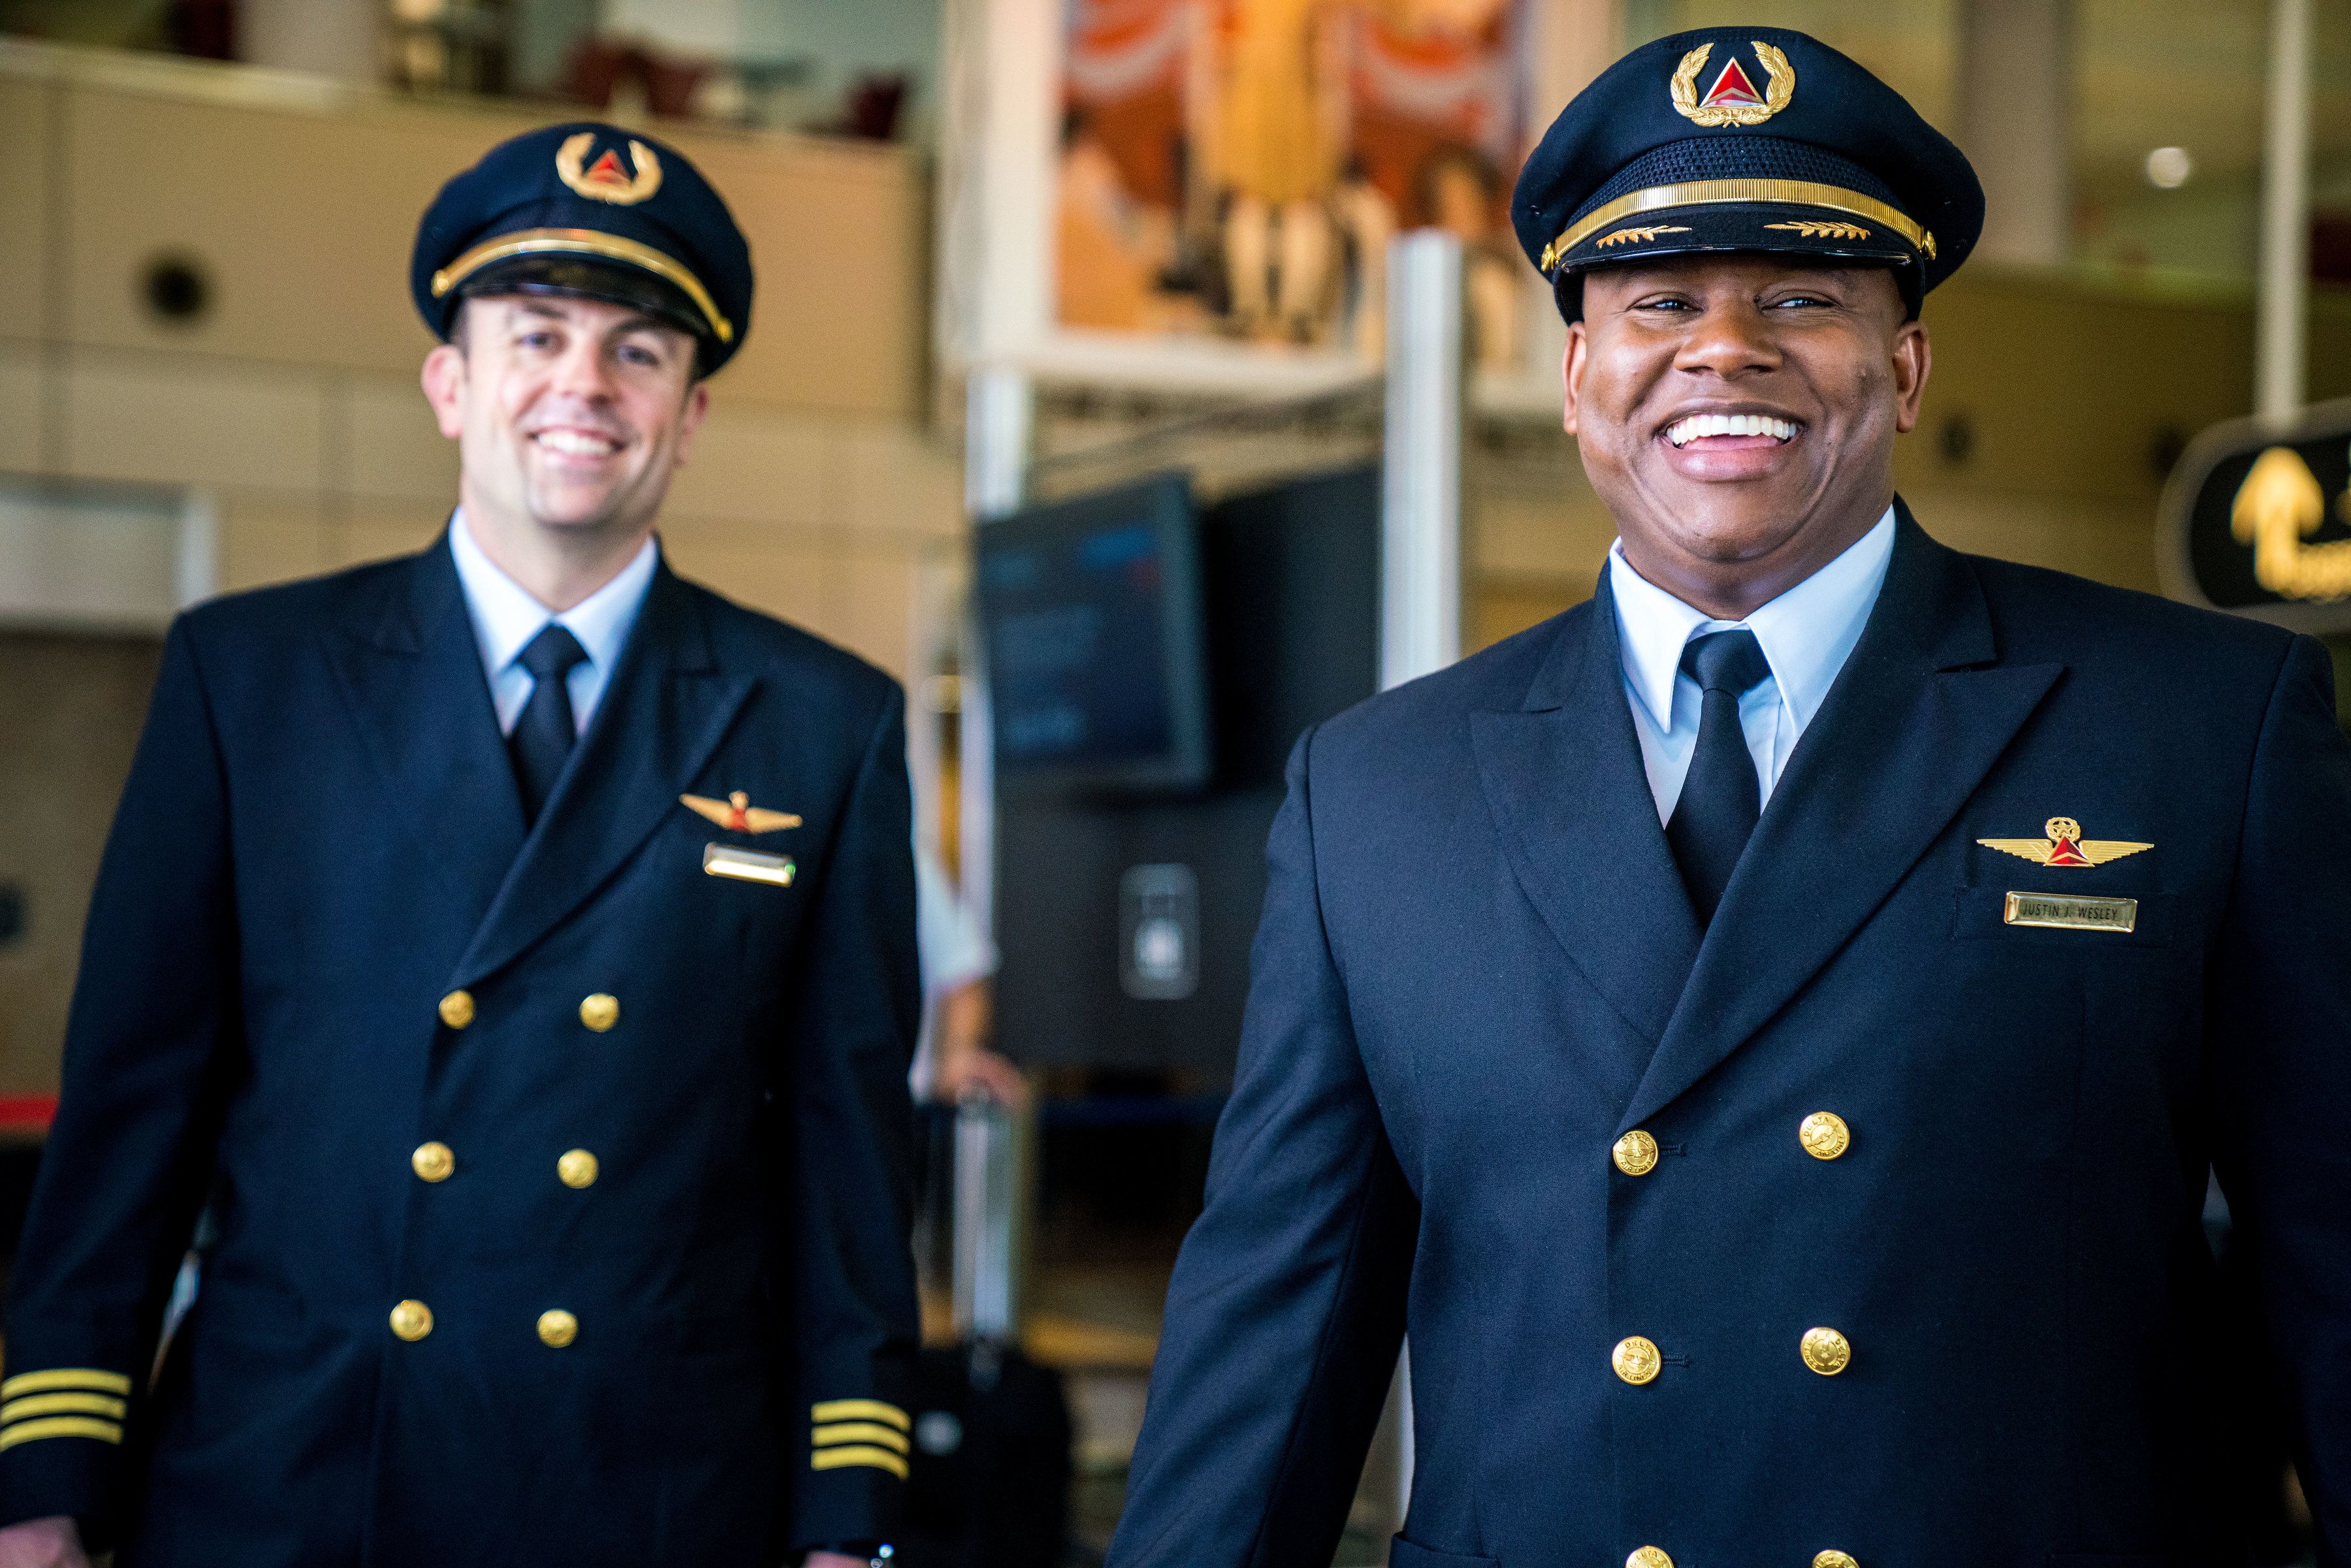 Delta Air Lines pilots in full uniform.